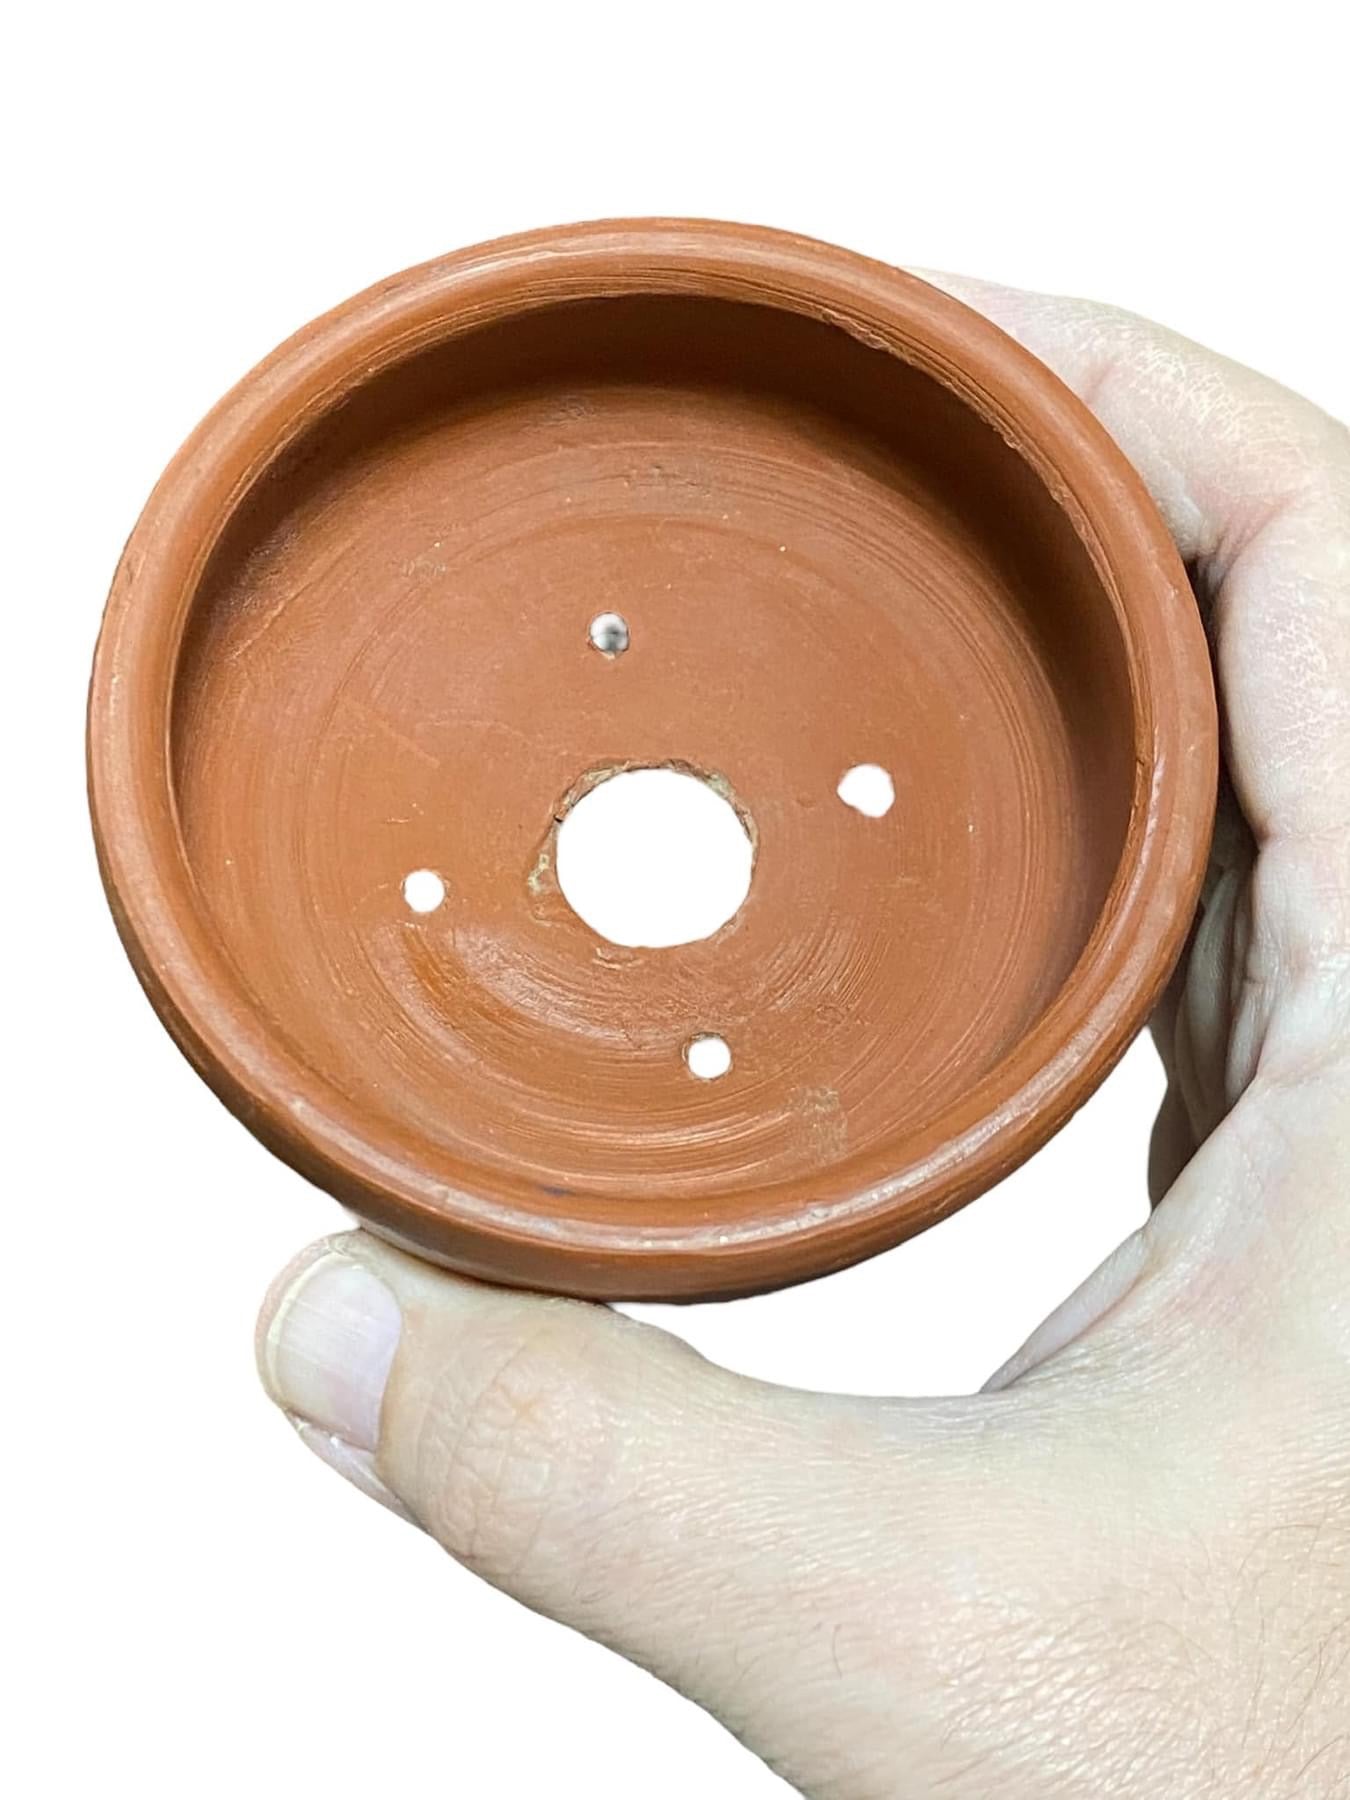 Japanese - Unlazed Round Bonsai Pot from Japan